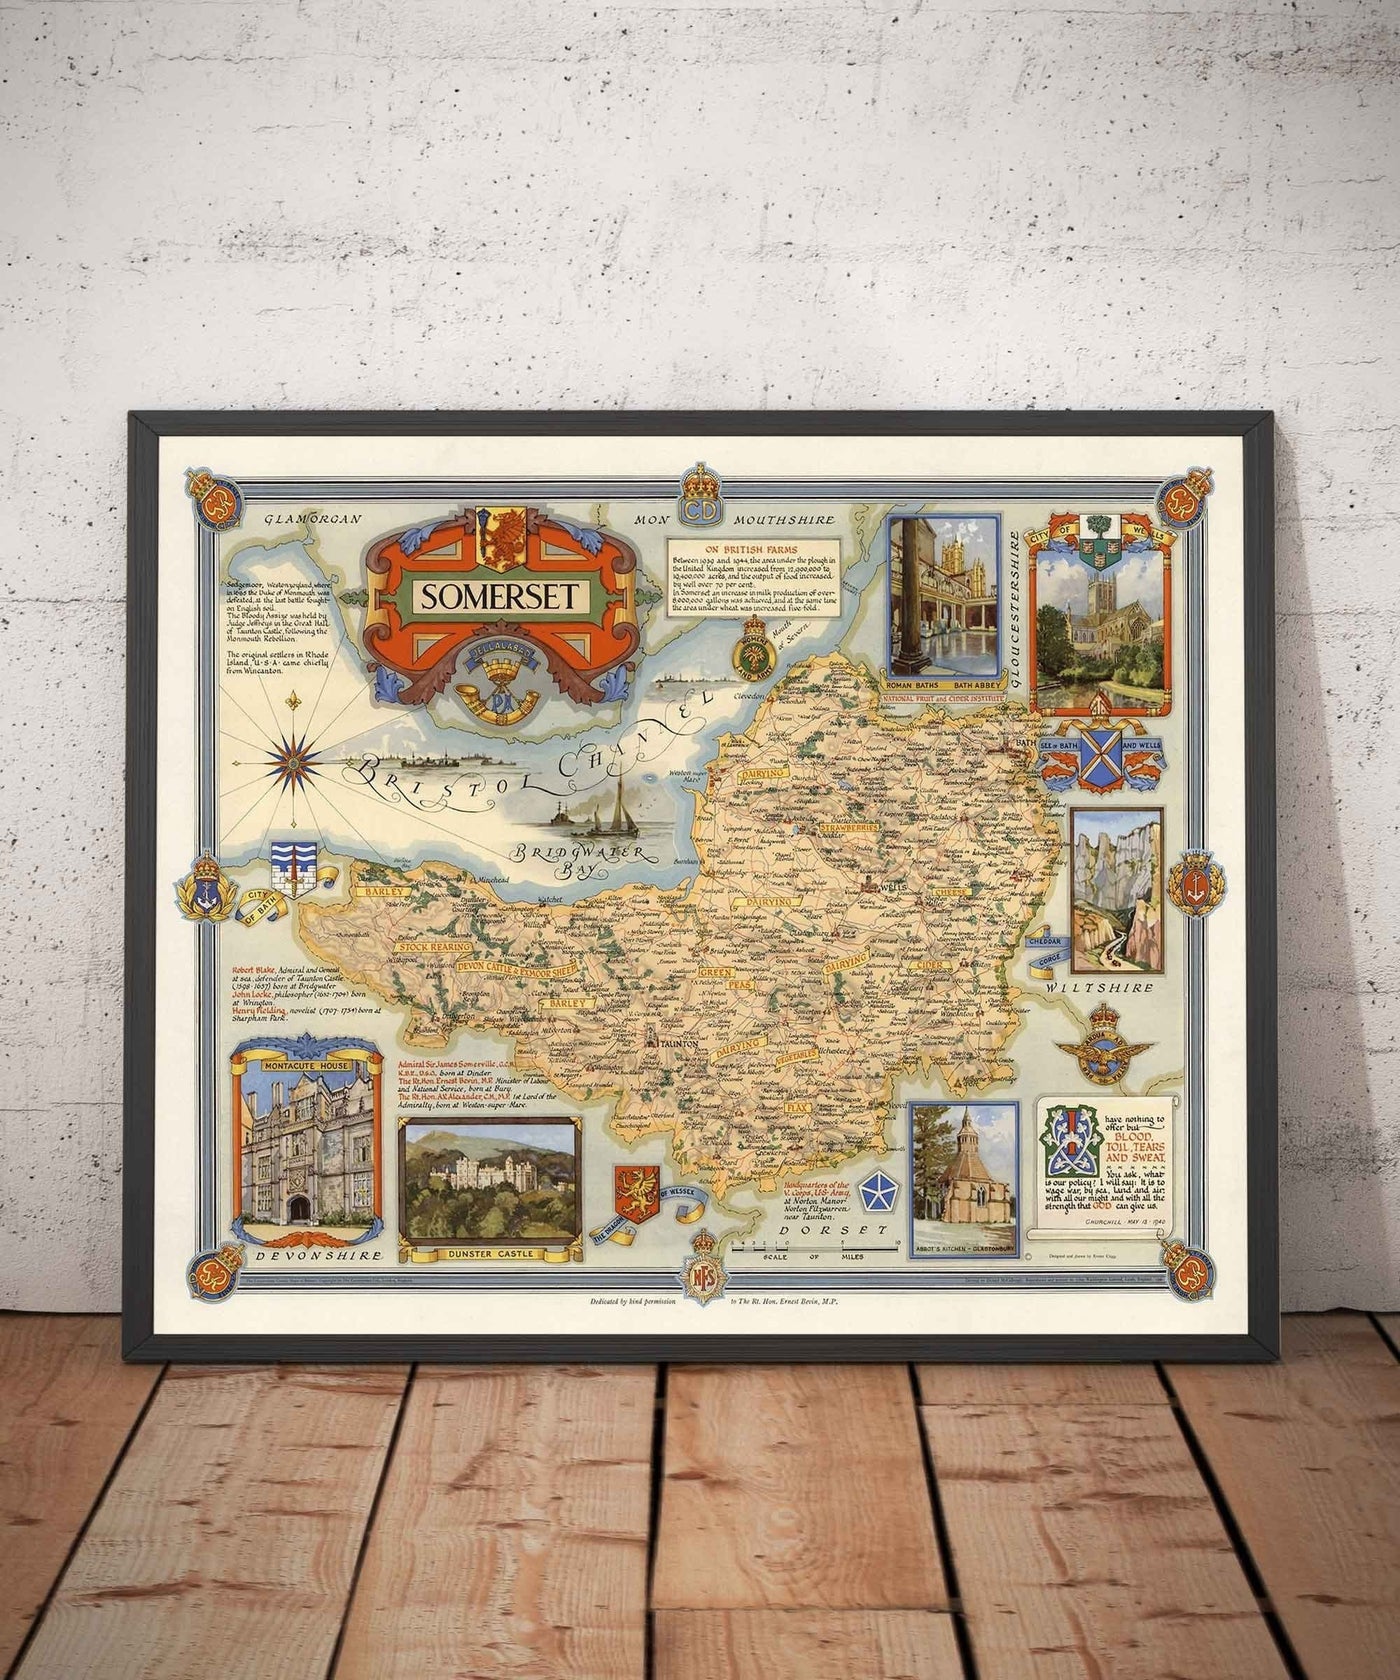 Antiguo mapa de Somerset por Ernest Clegg, 1946 - Bath, Wells, Landmarks, World War 2, West Country, Winston Churchill